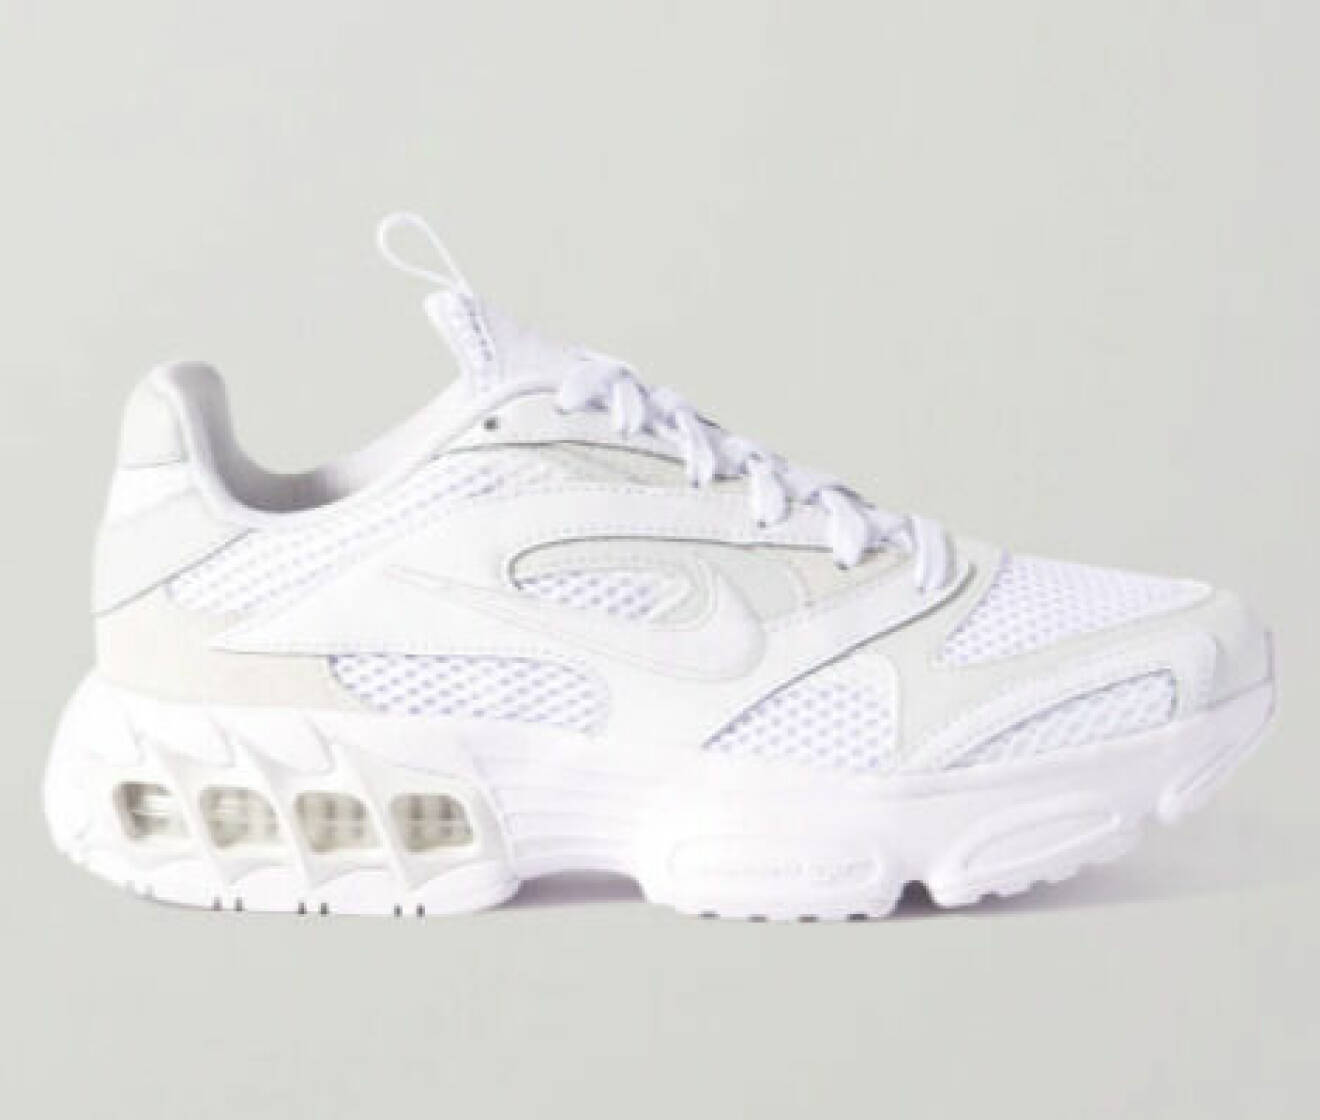 Vita, grova sneakers från Nike.